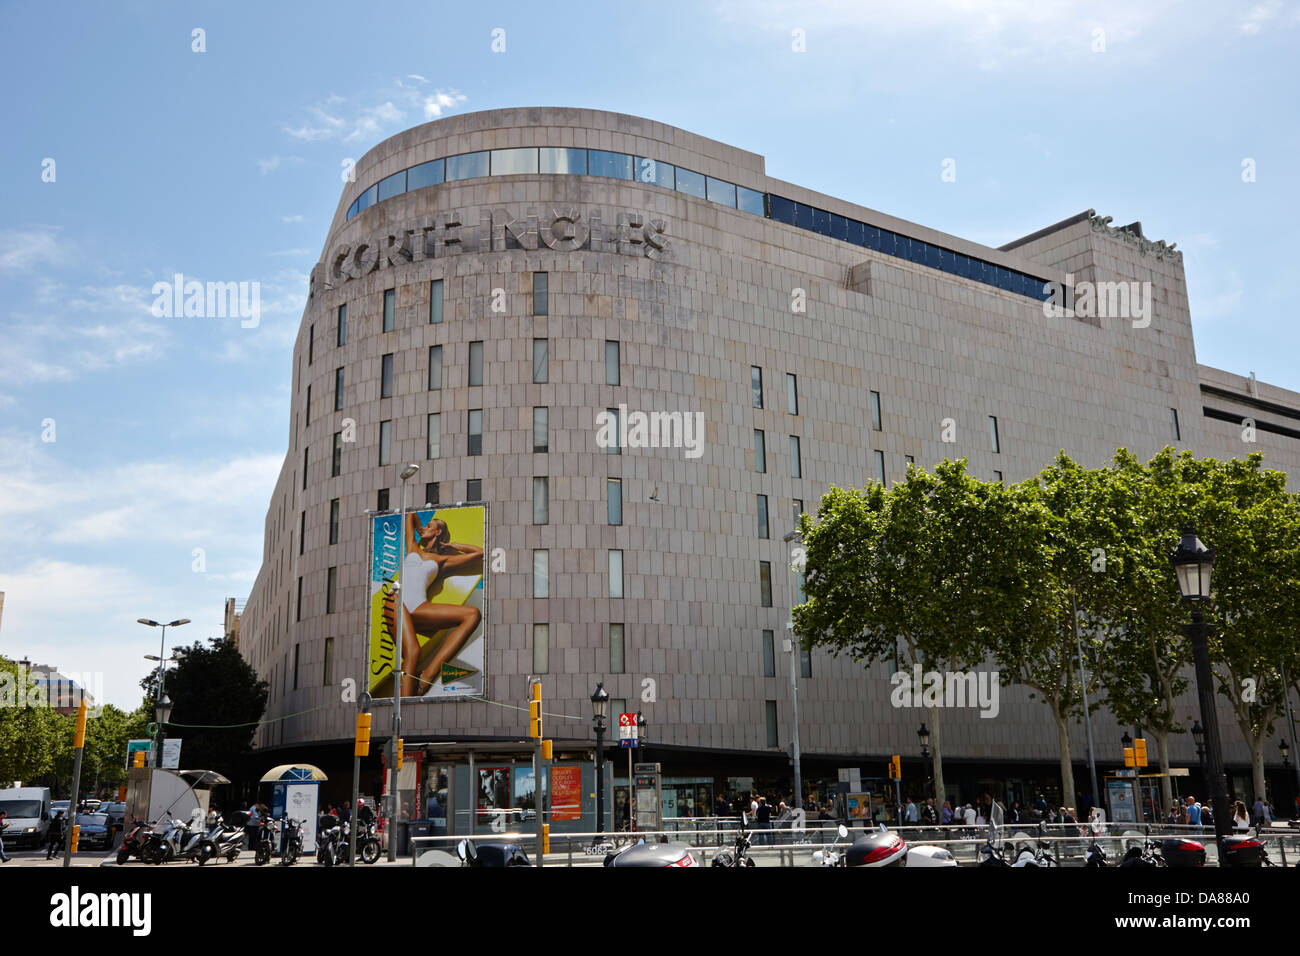 el corte ingles department store on placa catalunya Barcelona Catalonia Spain Stock Photo